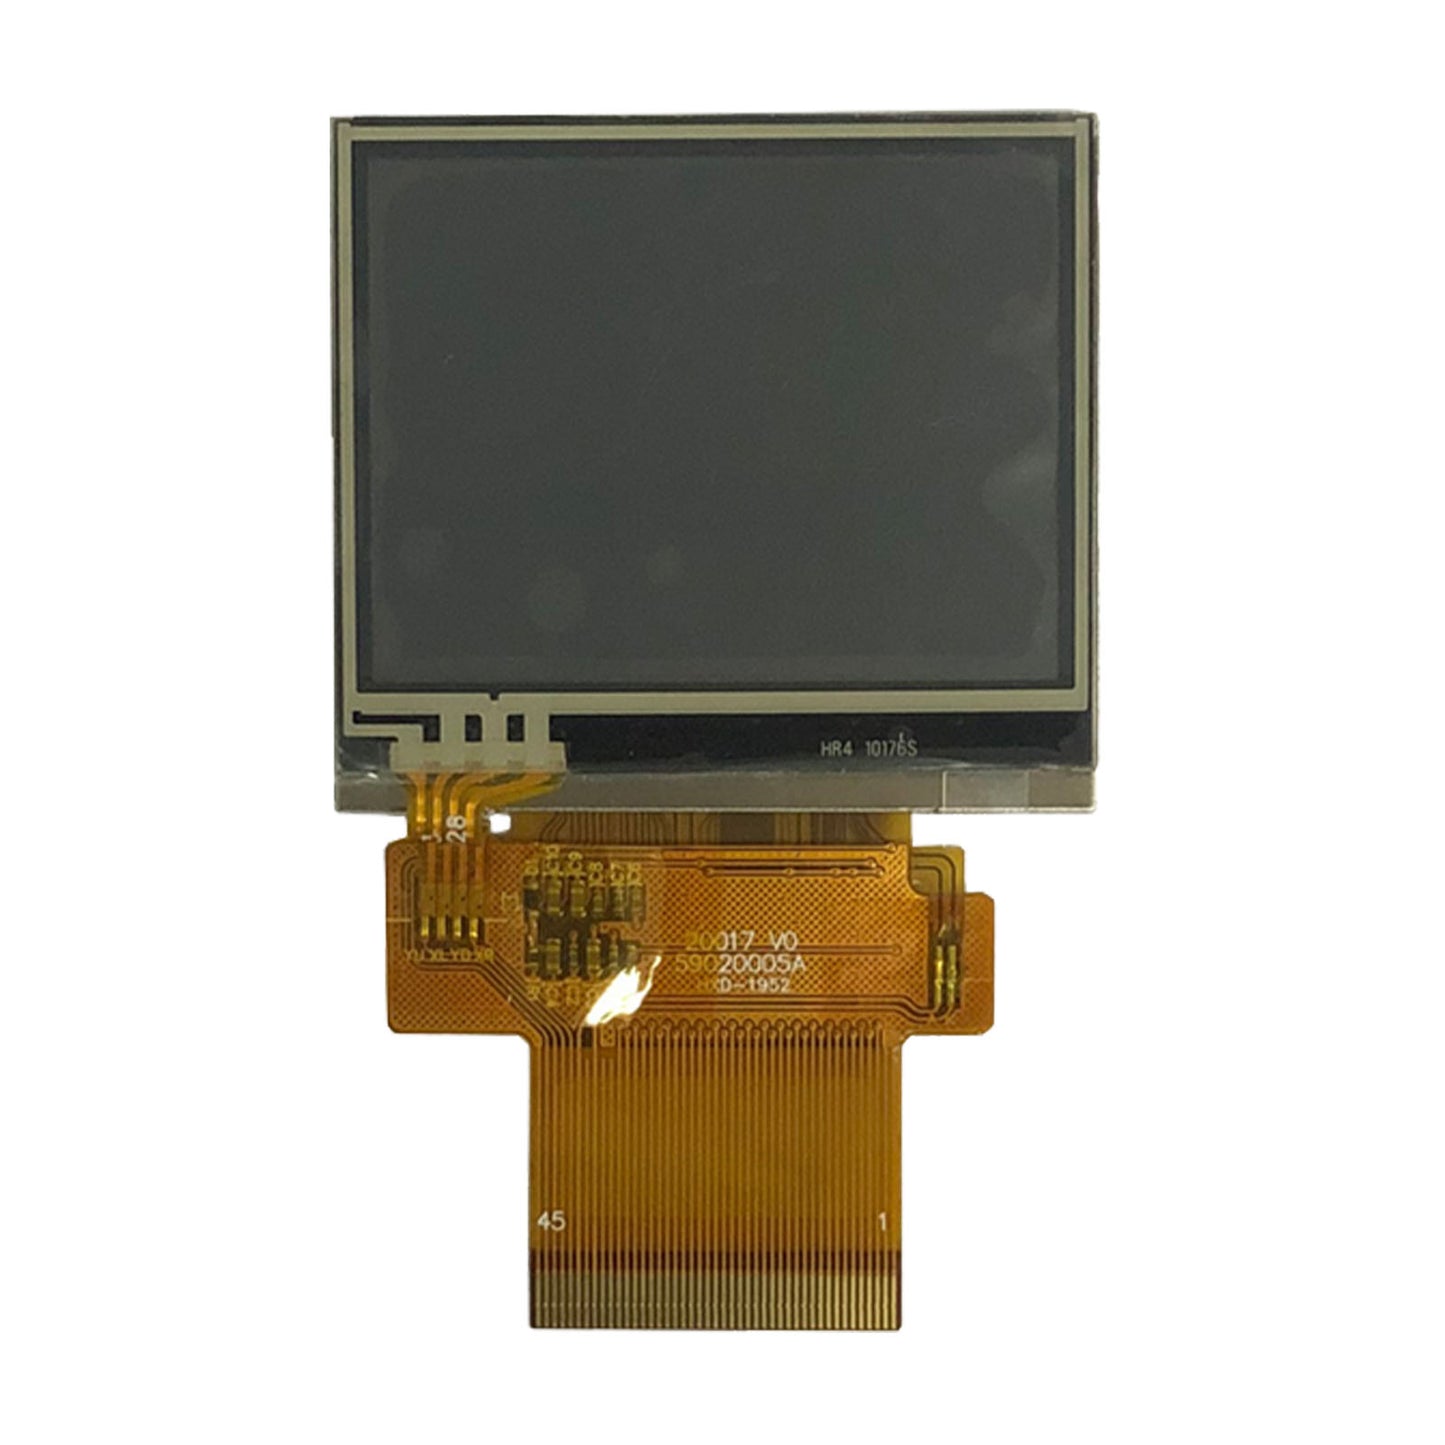 DisplayModule 2.0" 320X240 Transflective Display Panel with Resistive Touch – MCU/SPI/RGB